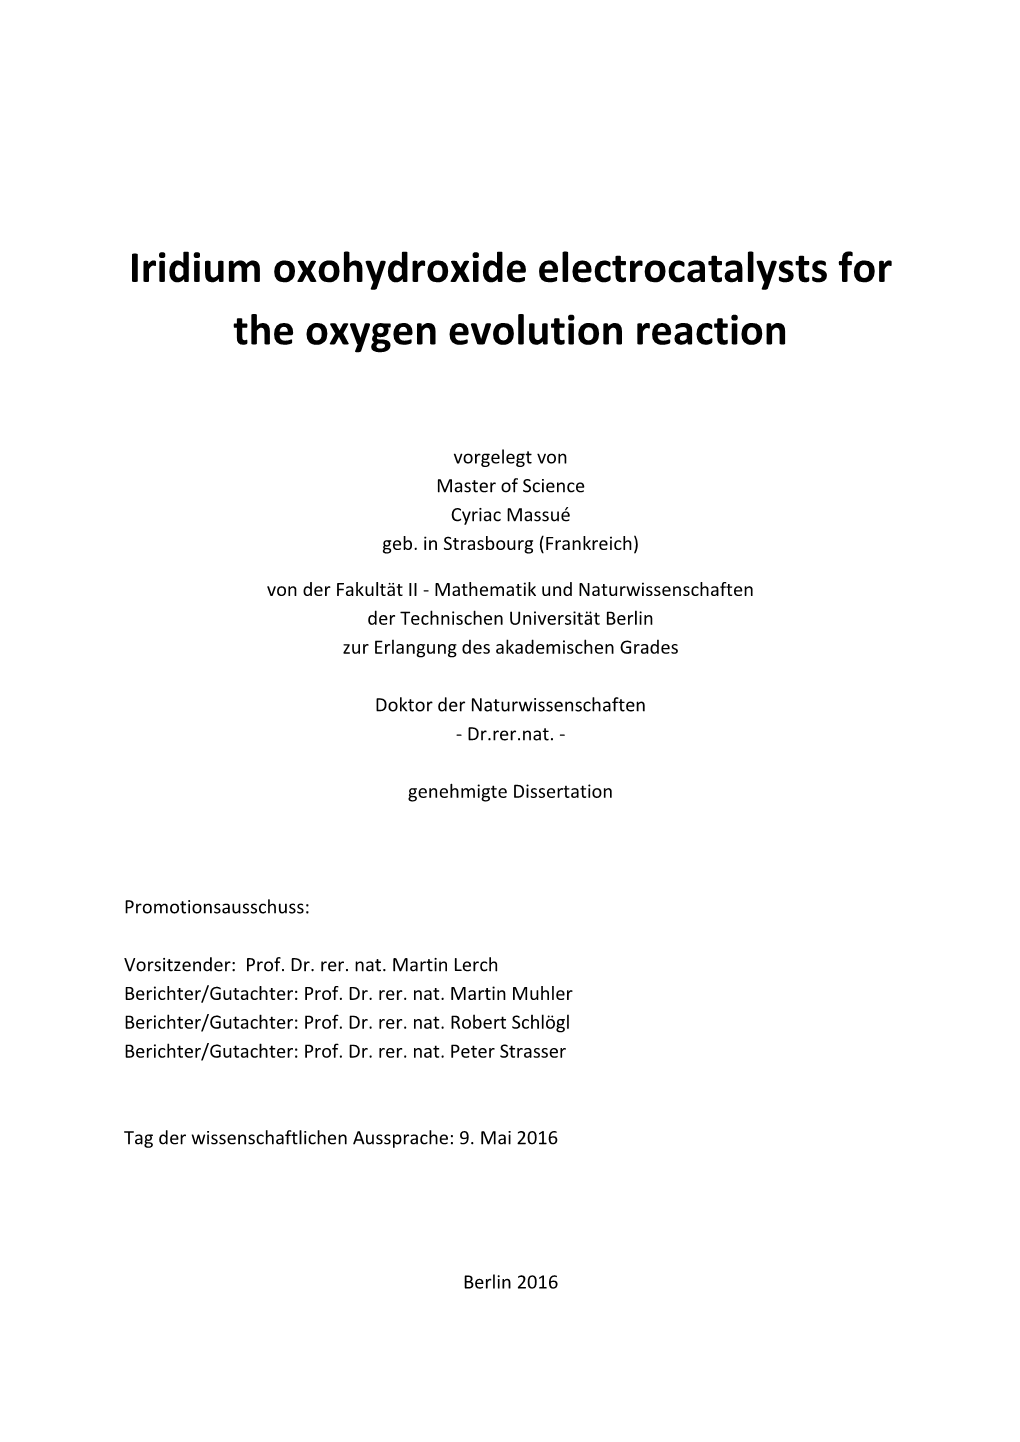 Iridium Oxohydroxide Electrocatalysts for the Oxygen Evolution Reaction